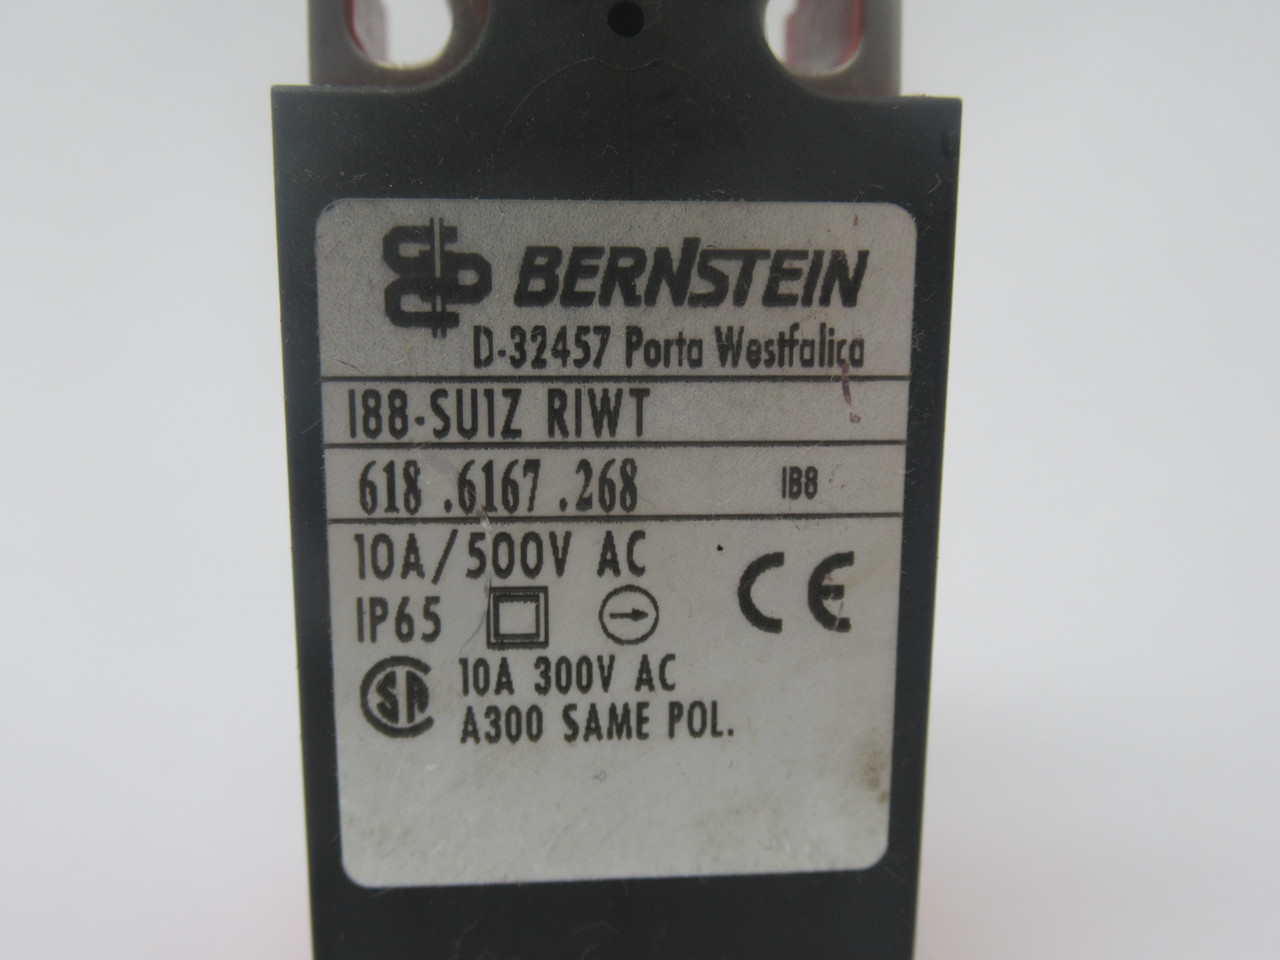 Bernstein 618.6167.268 I88-SU1Z RIWT Limit Switch Roller Lever 10A 500VAC USED